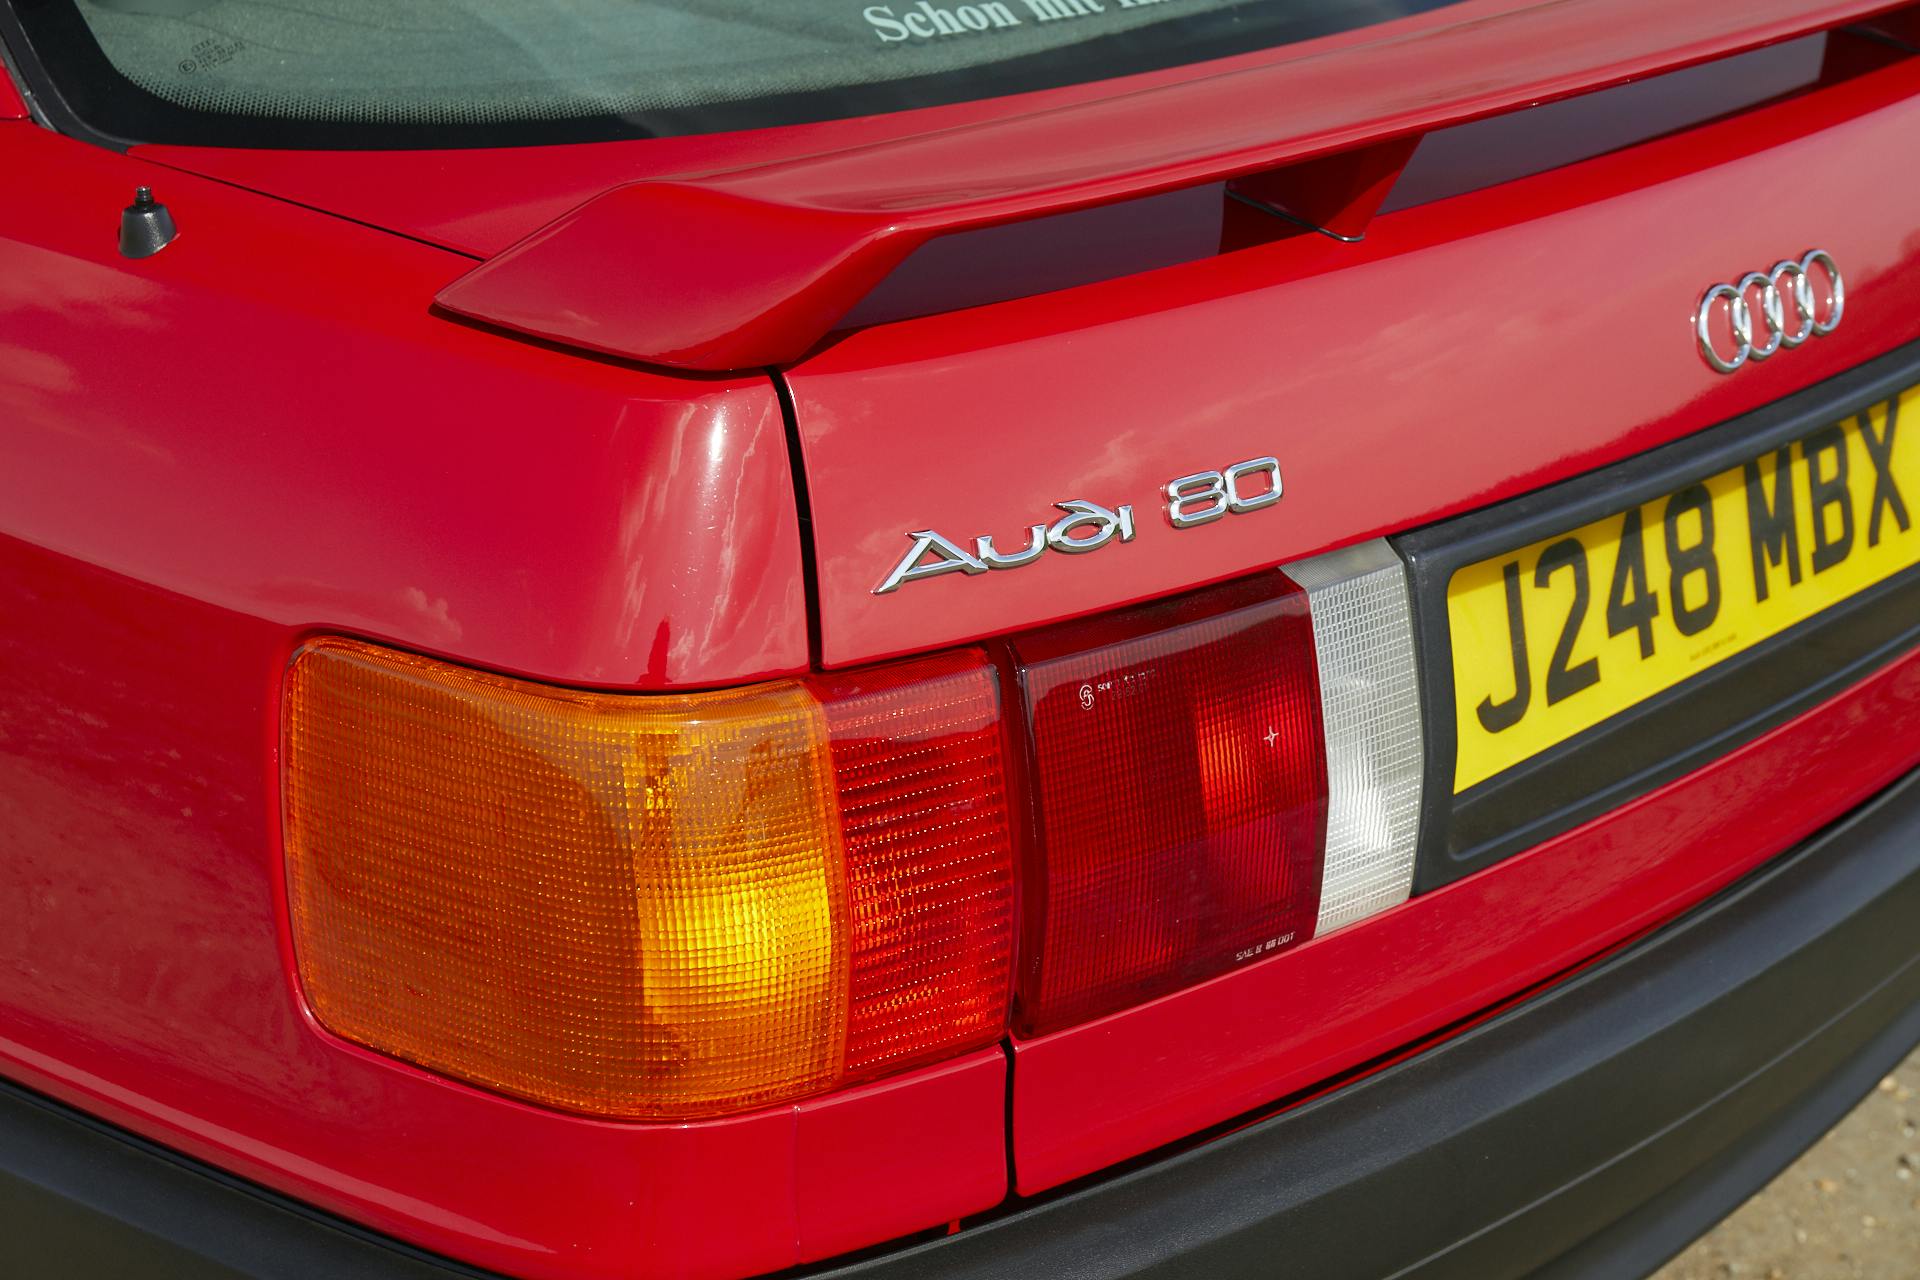 Audi 80 rear badge